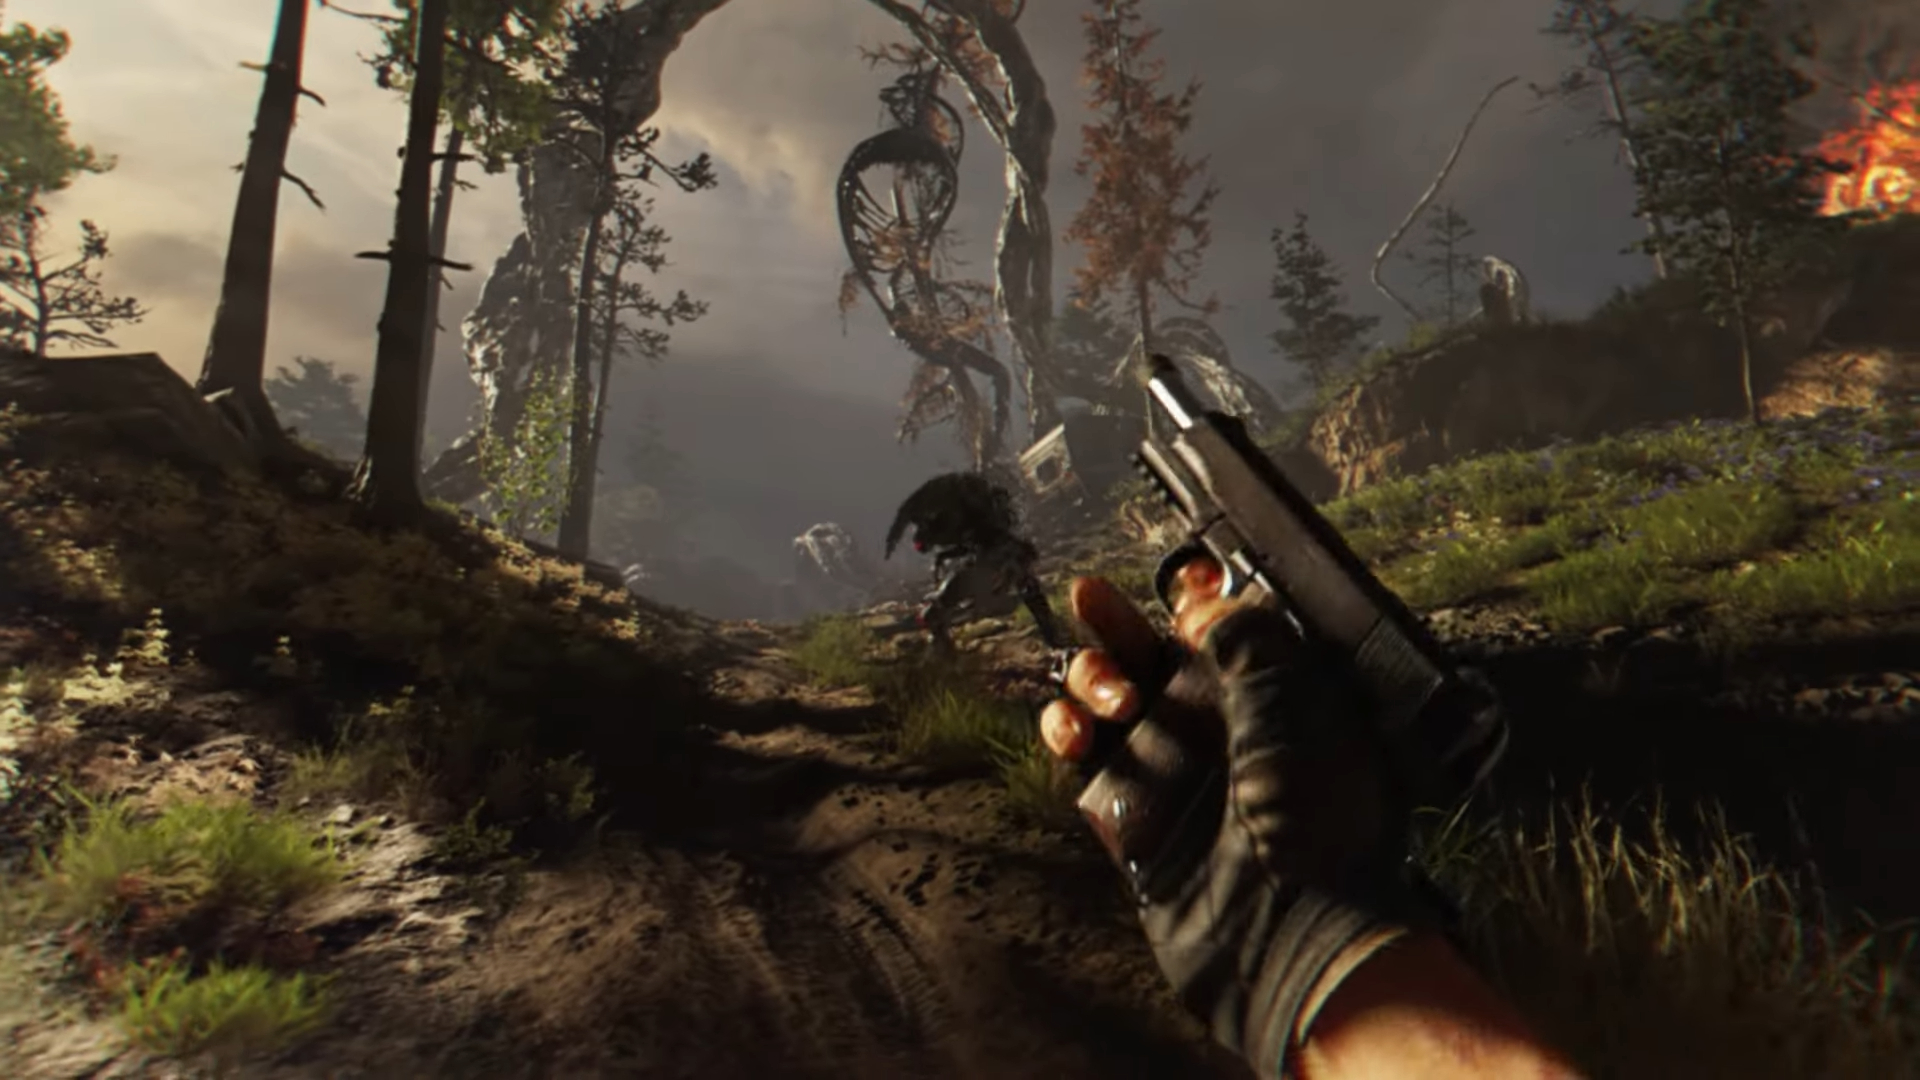 John Carpenter's Toxic Commando : Gameplay Trailer 4K 